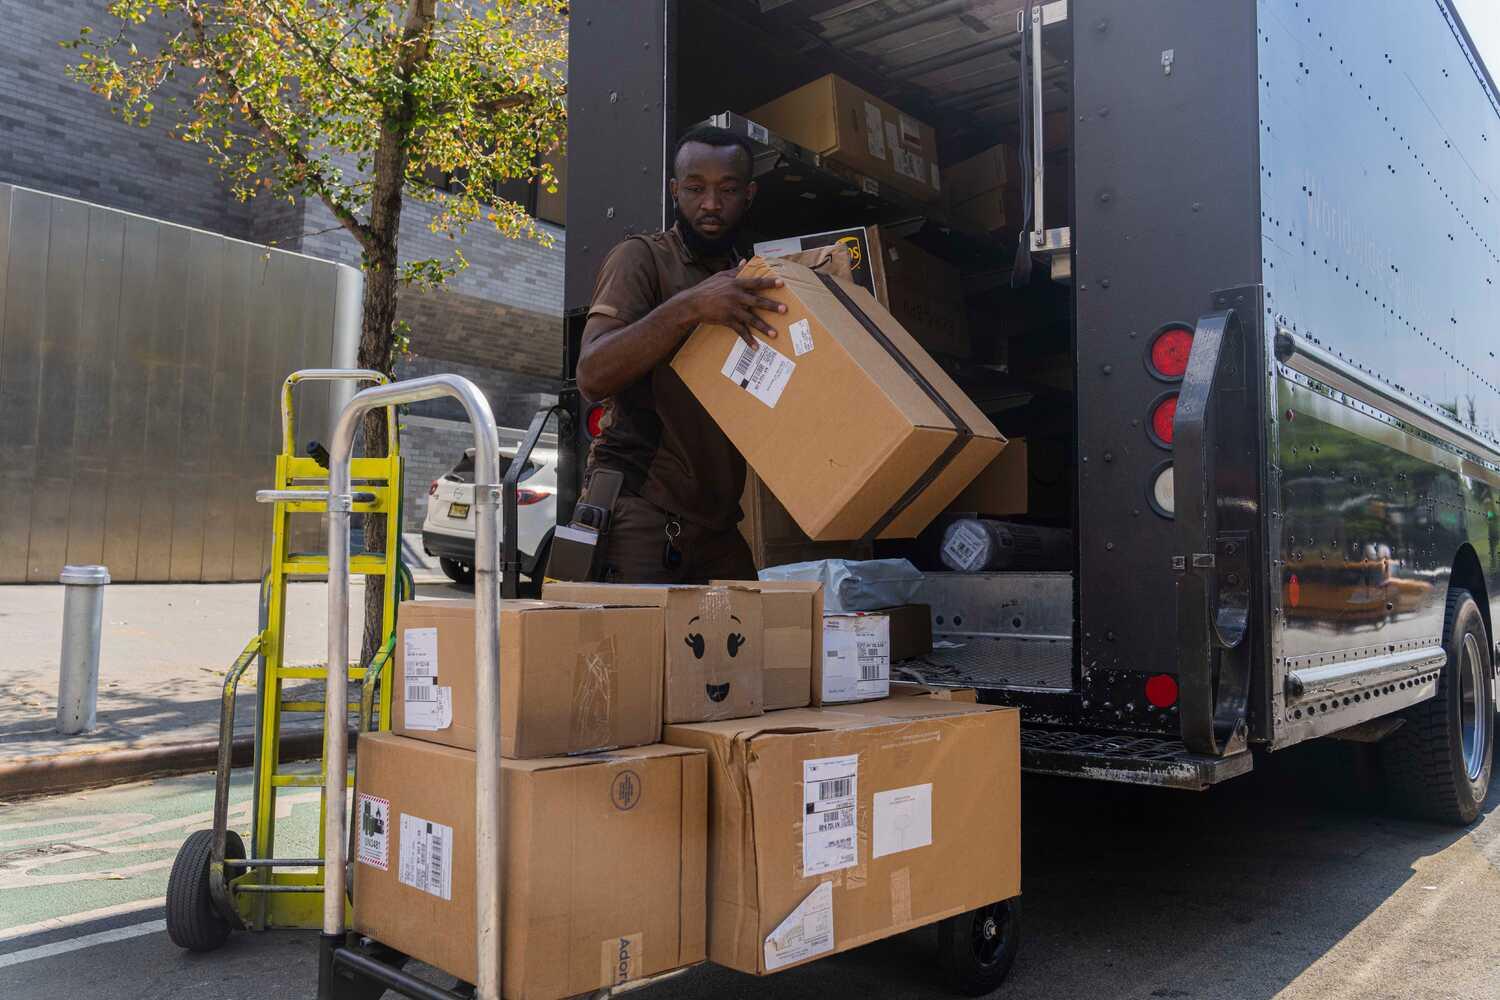 A Black man in a brown UPS uniform unloads packages from a truck on a Manhattan street.